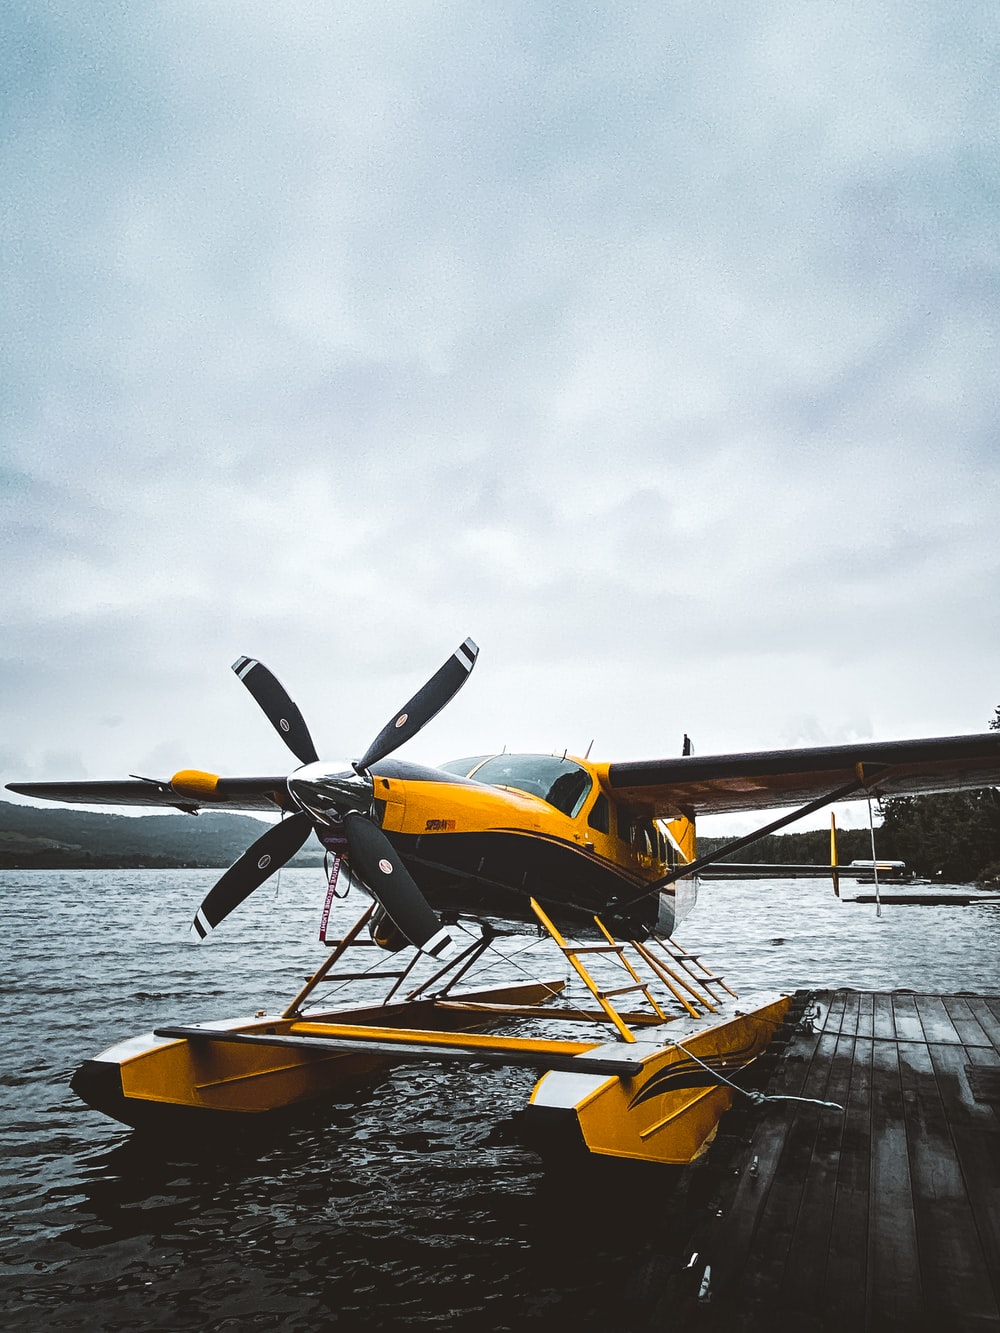 Seaplane Picture. Download Free Image